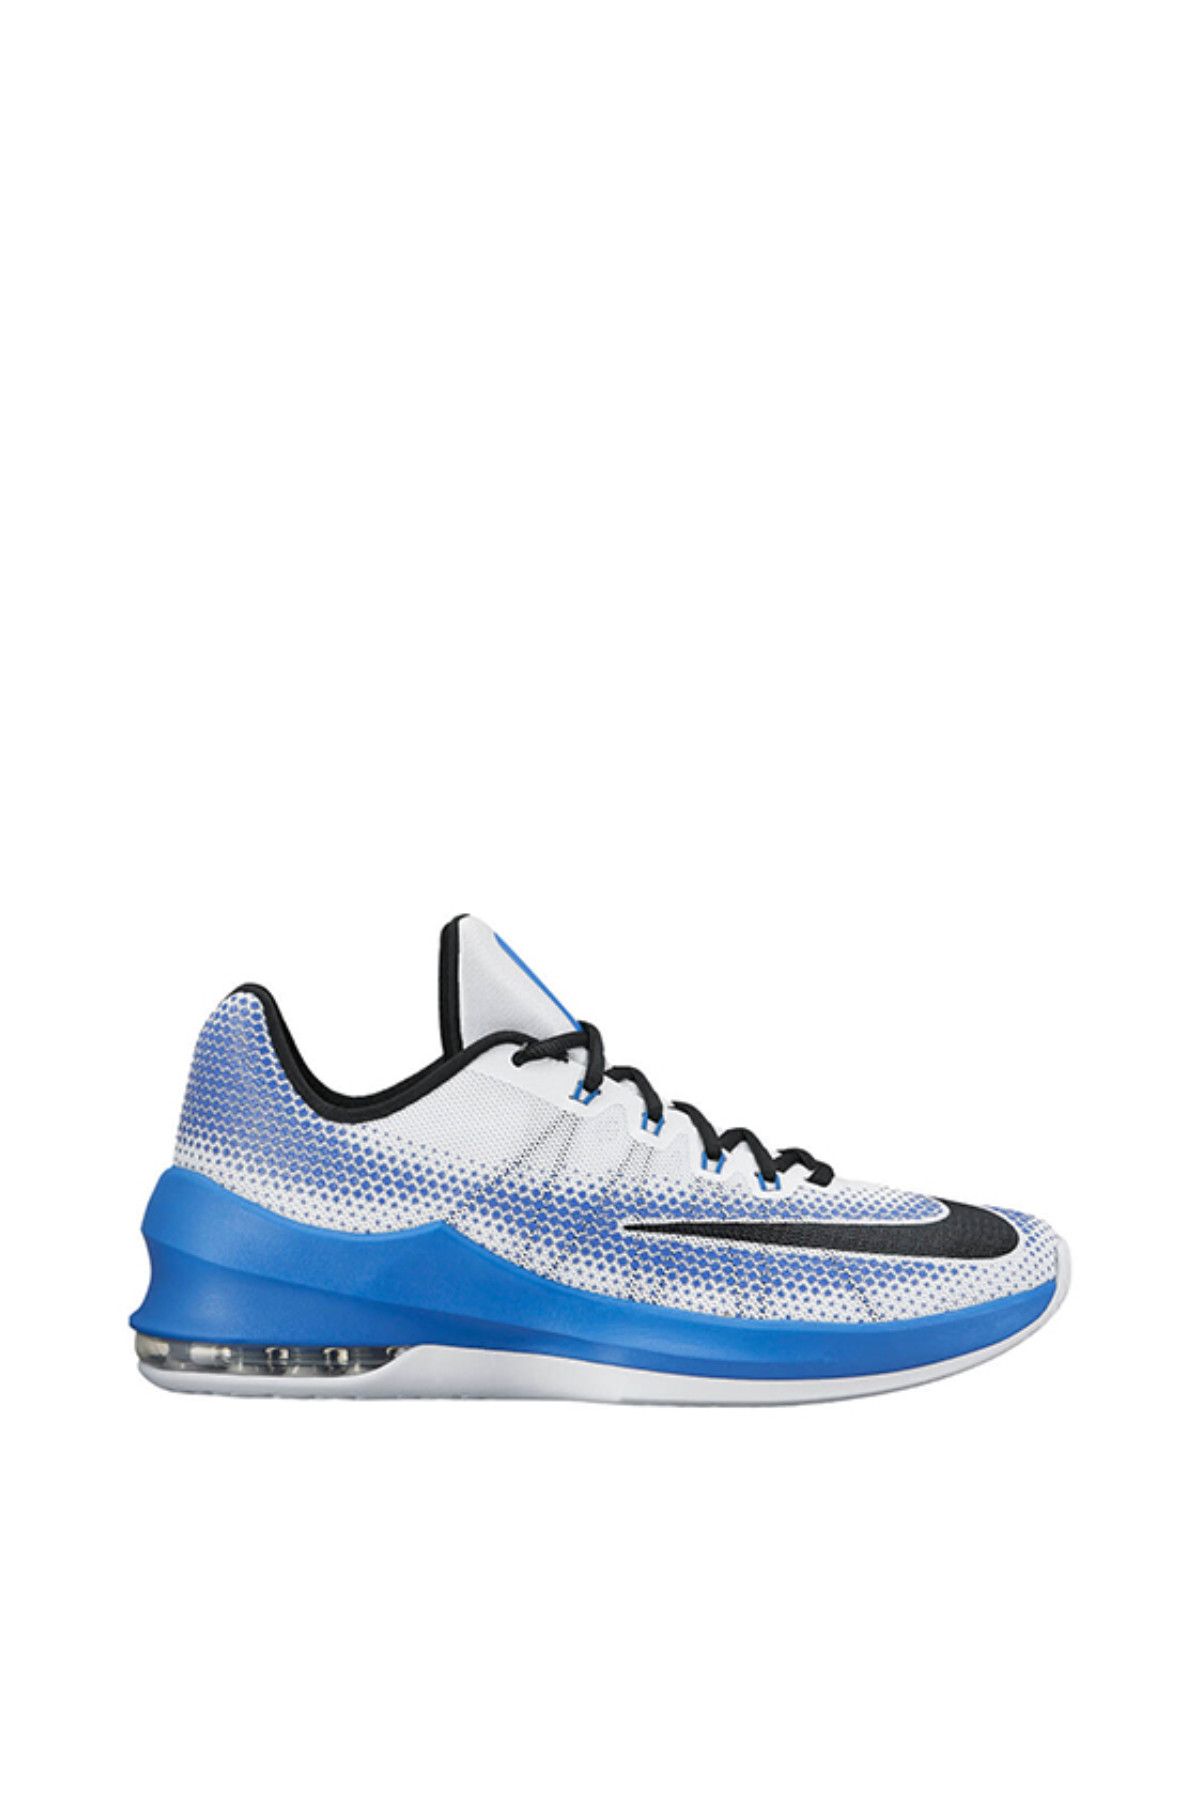 Nike Erkek Basketbol Ayakkabısı - Air Max Infuriate Low - 852457-101